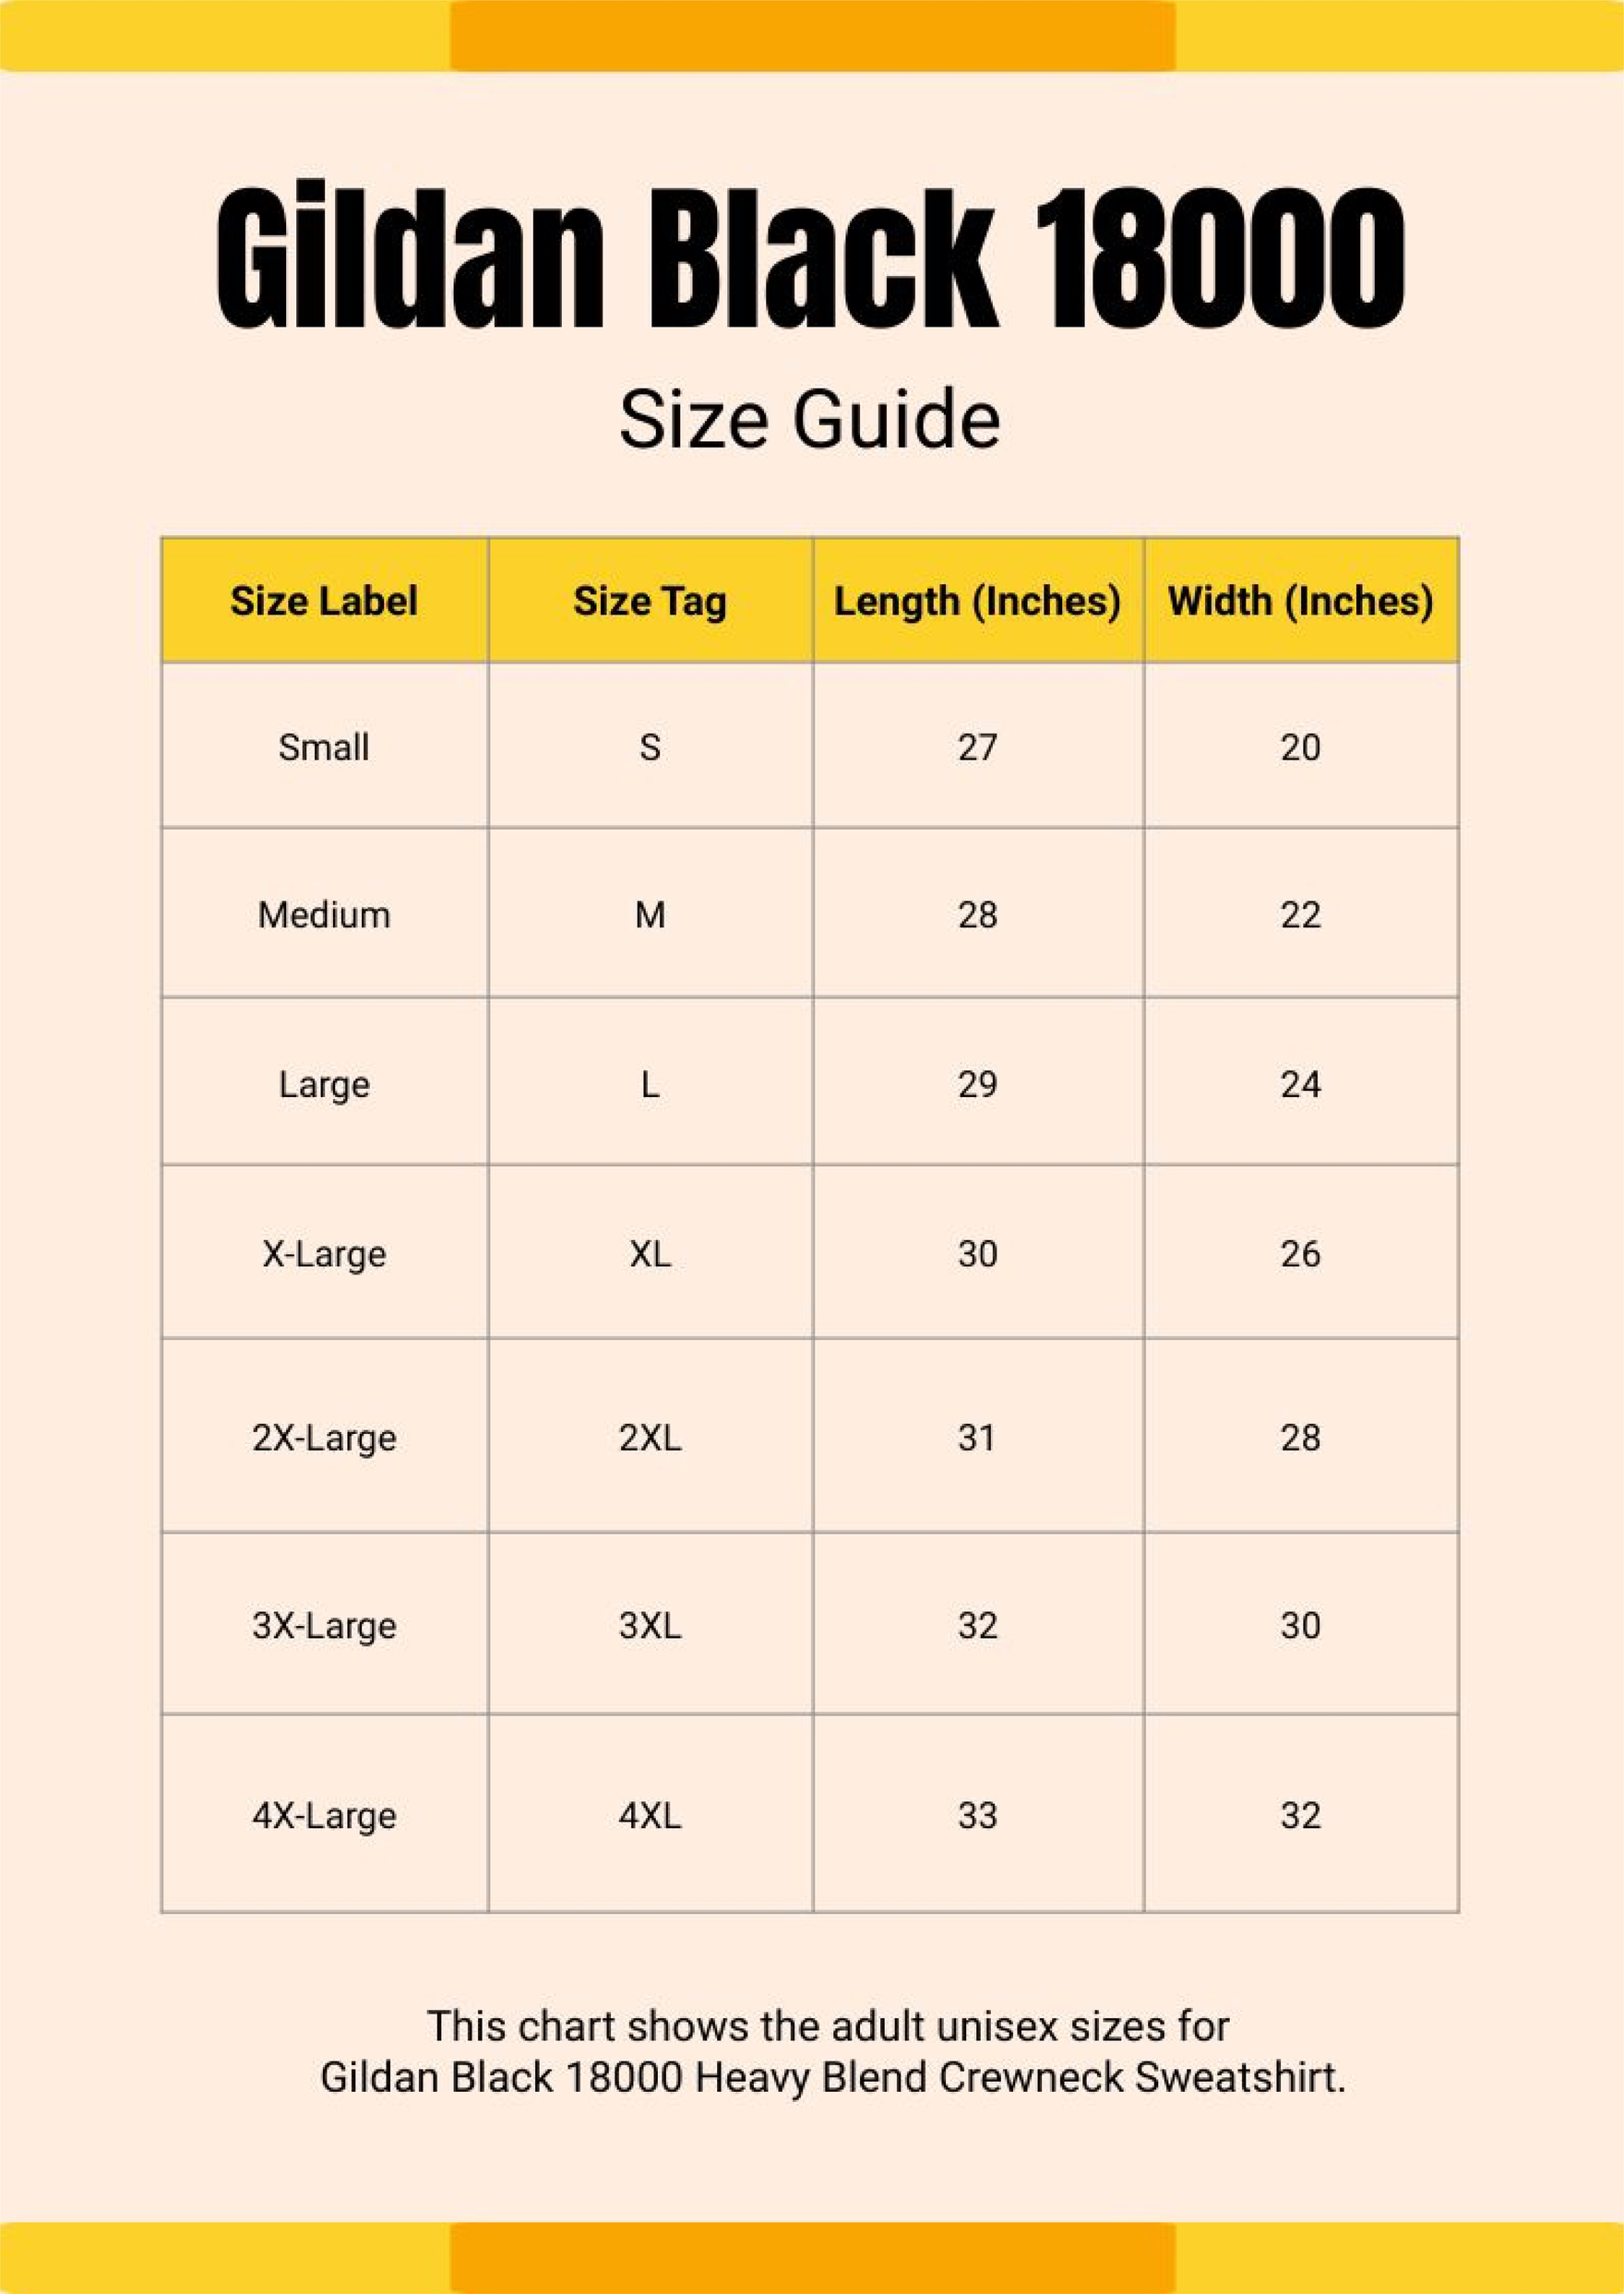 Free Gildan Black 18000 Size Chart in PDF, Illustrator